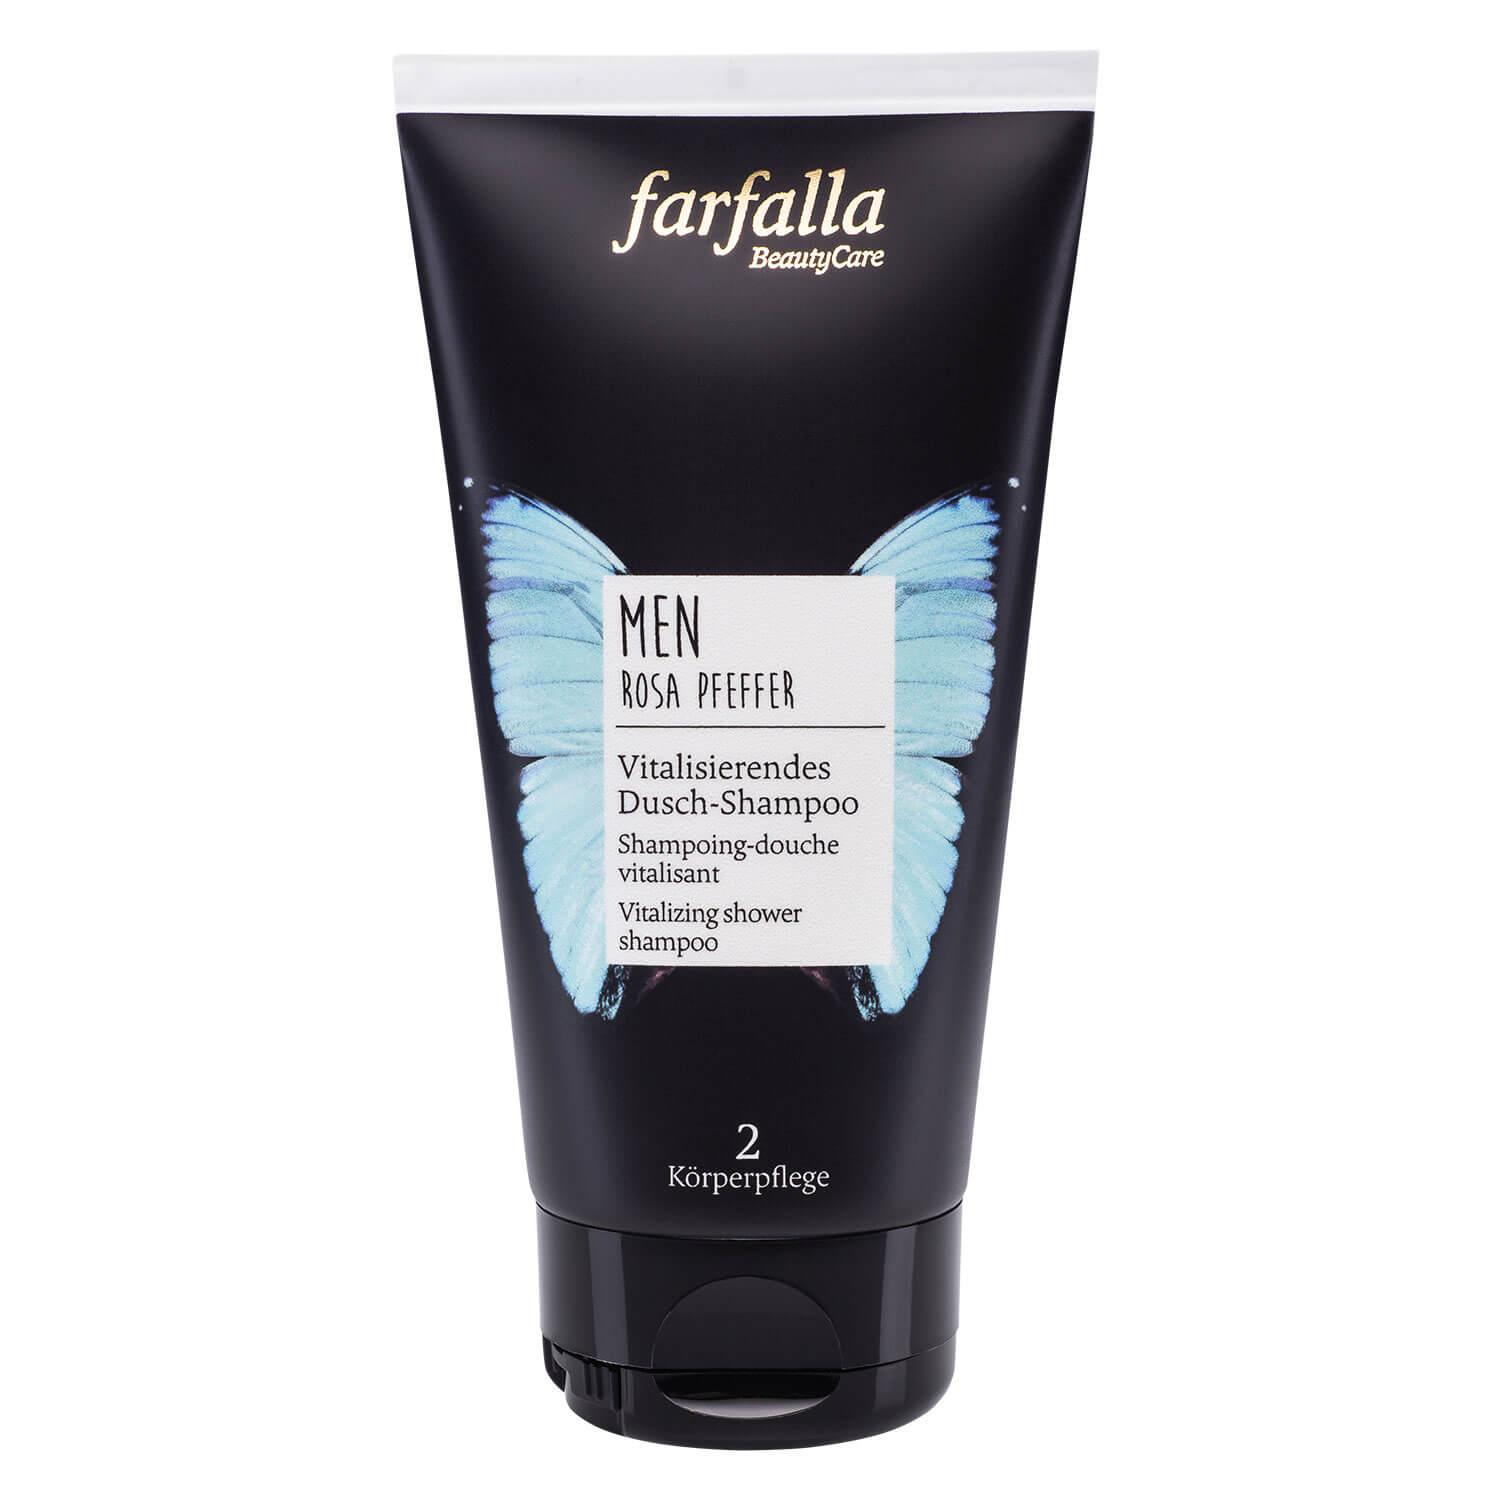 Farfalla Men - Rosa Pfeffer Vitalizing shower shampoo